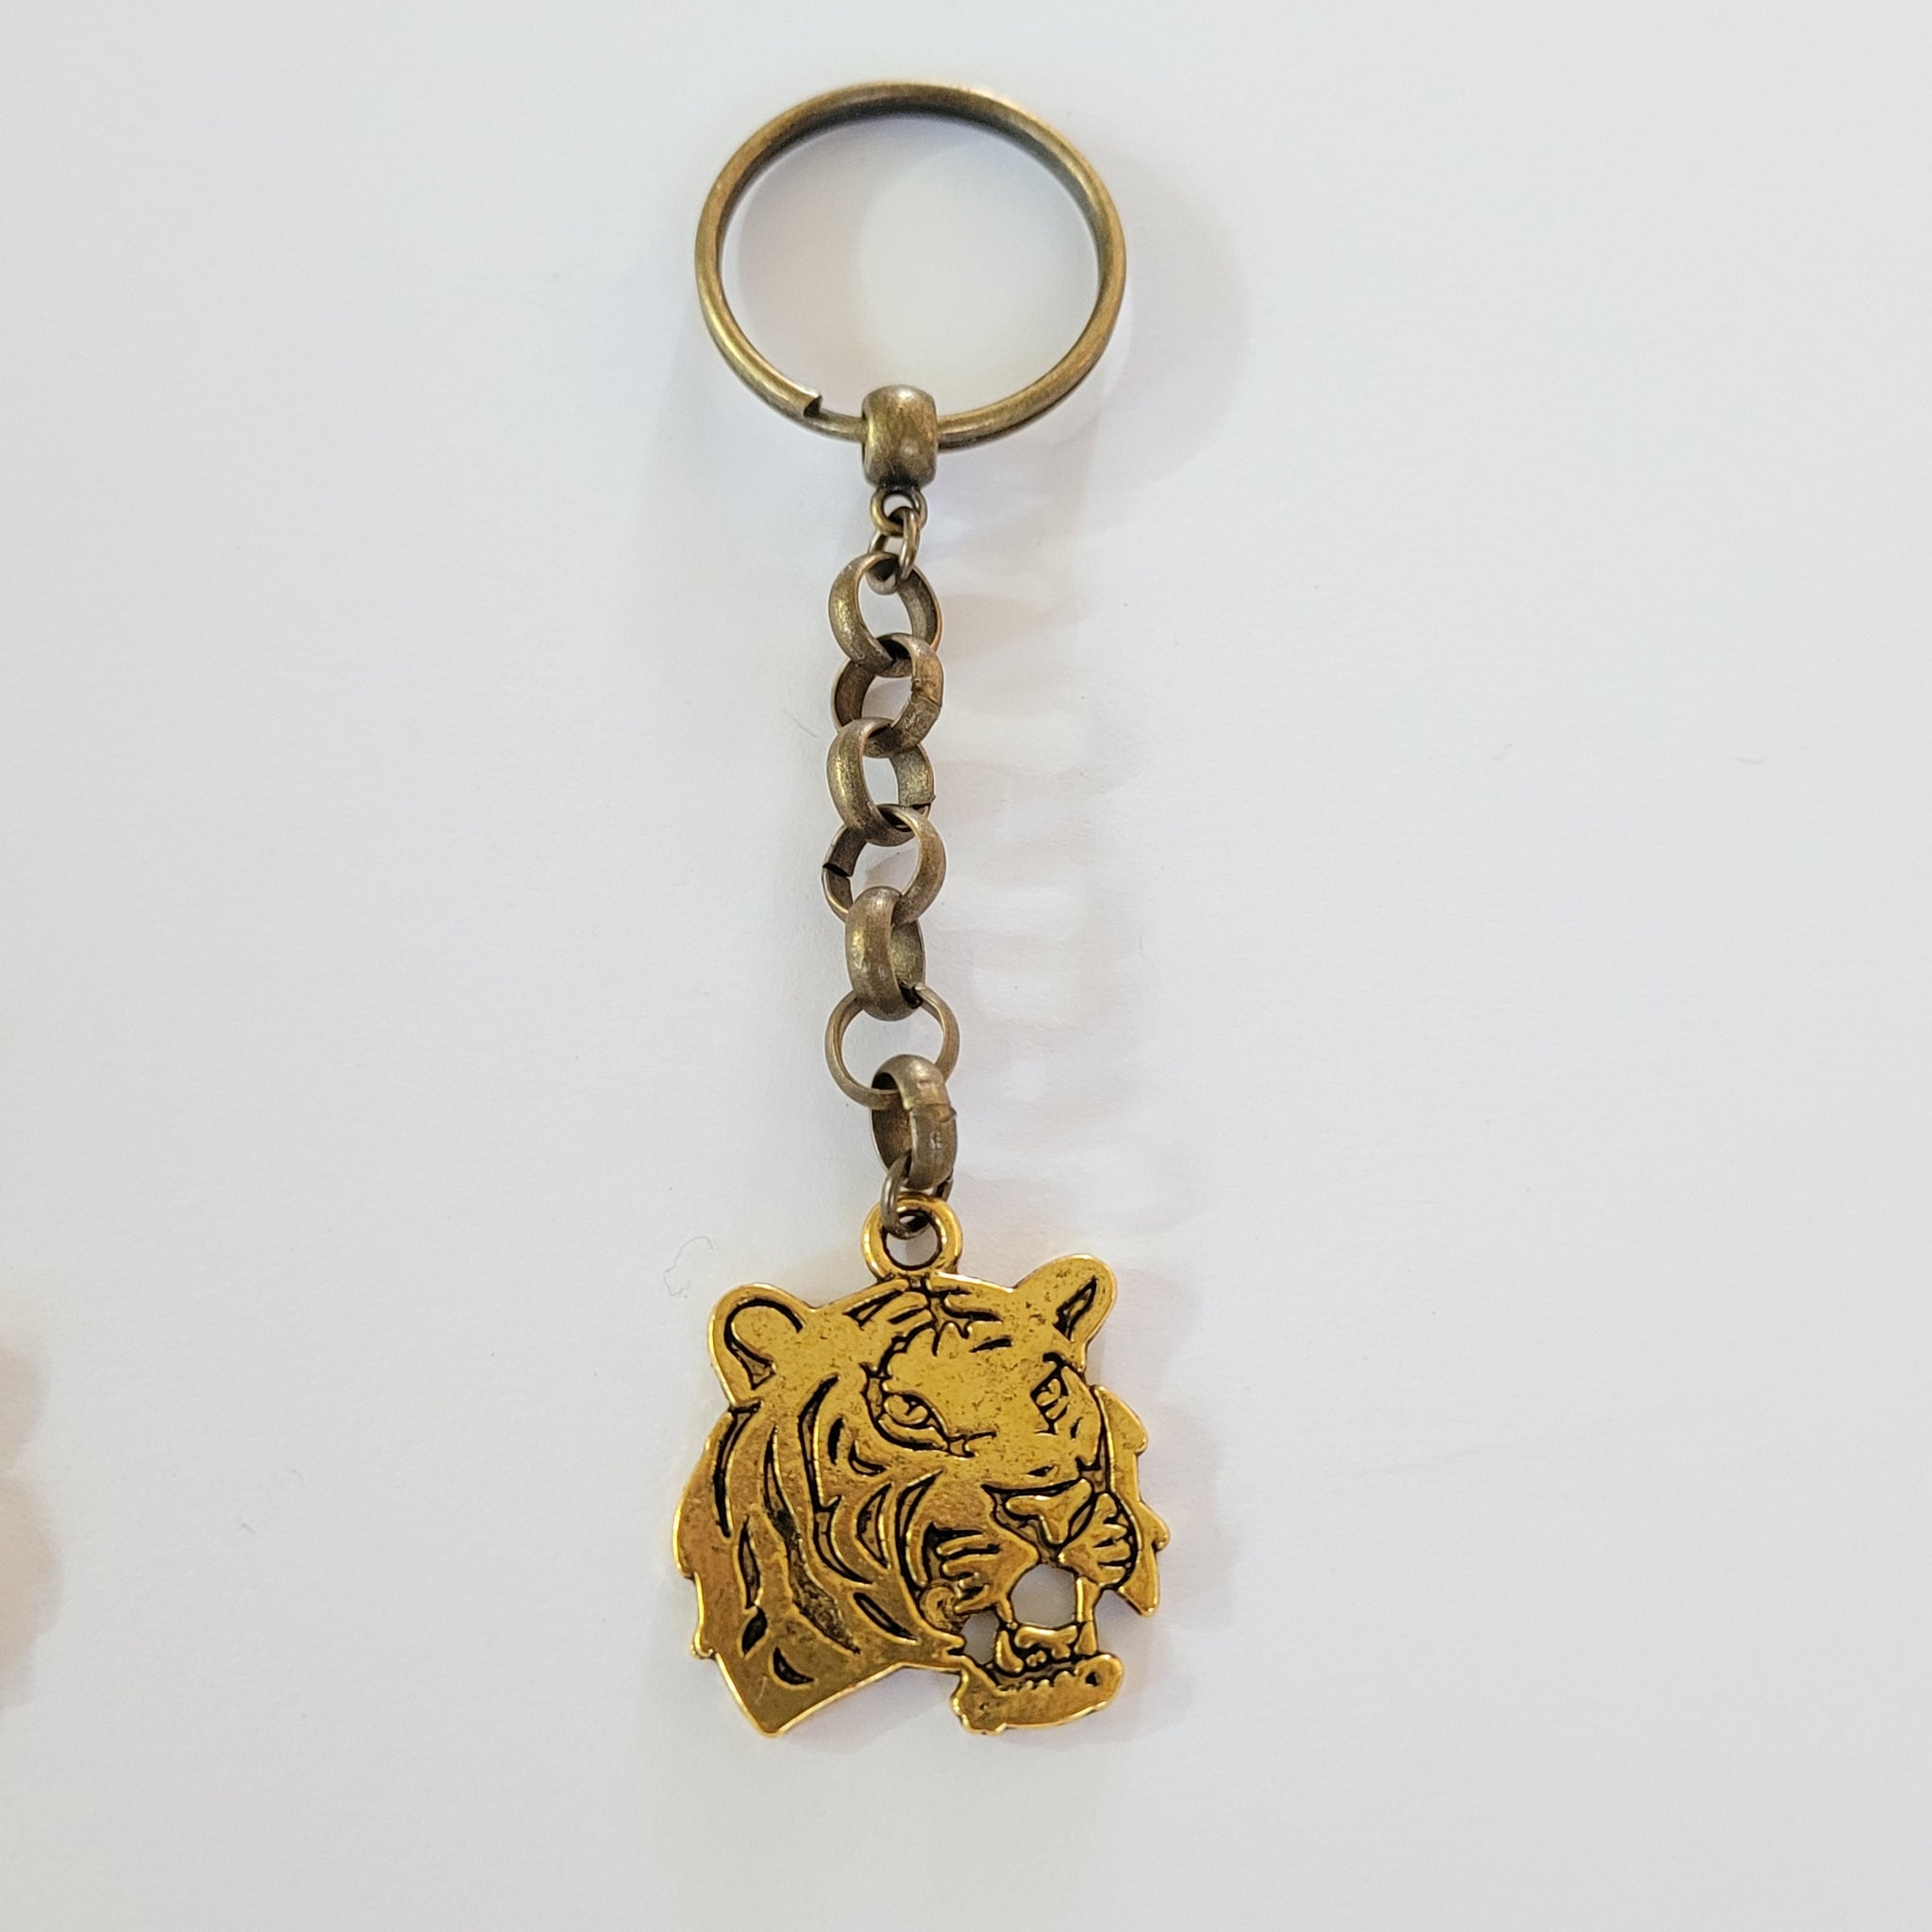 SHERCHPRY 2 pcs little tiger pendant tiger shaped key ring fur bag charm  rhinestone key chain pendant key chains for keychains for crystal purse  Tiger